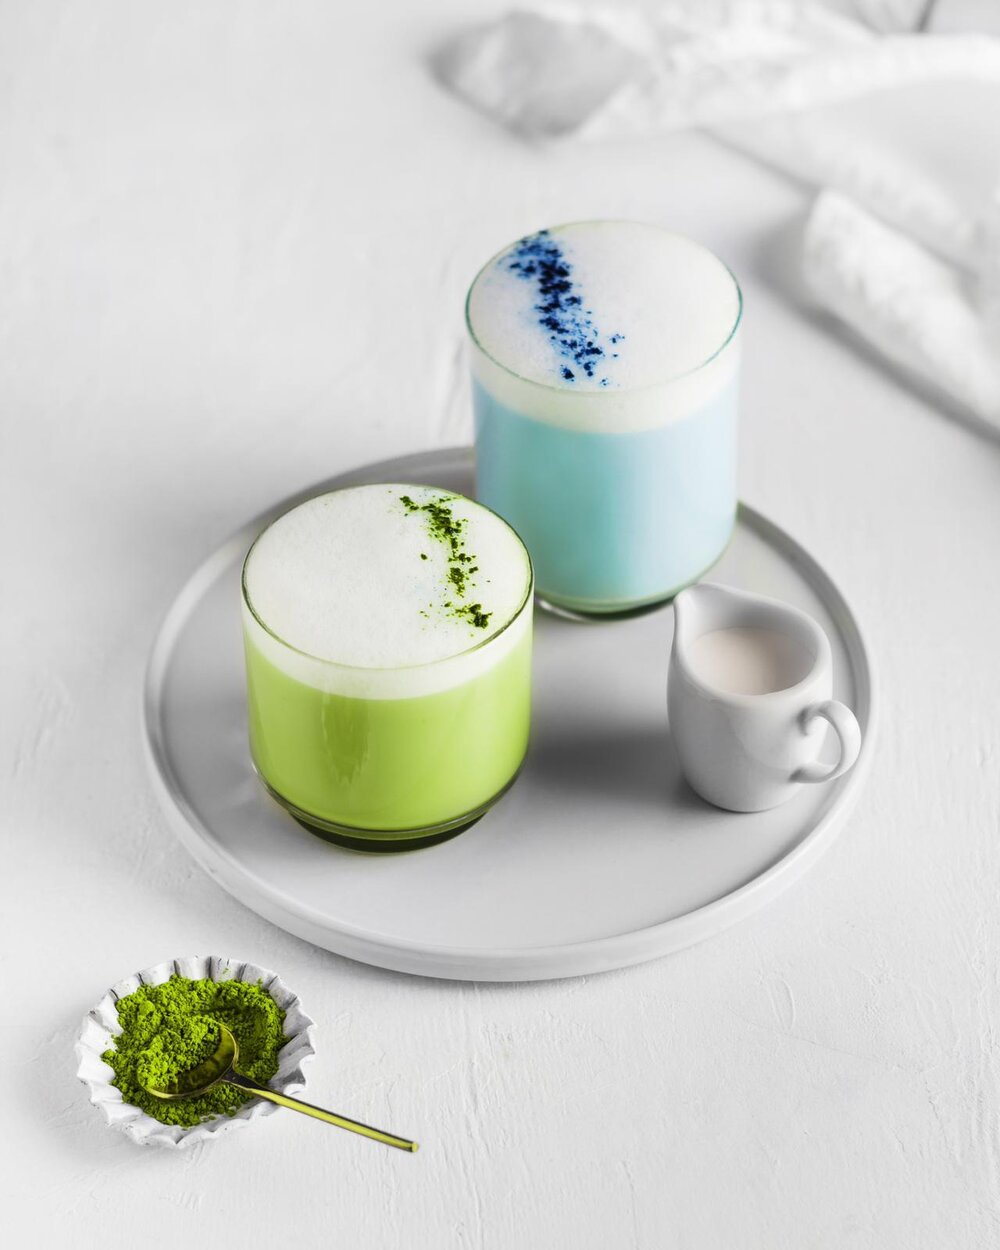 Is Blue Tea Superior to Green Tea?